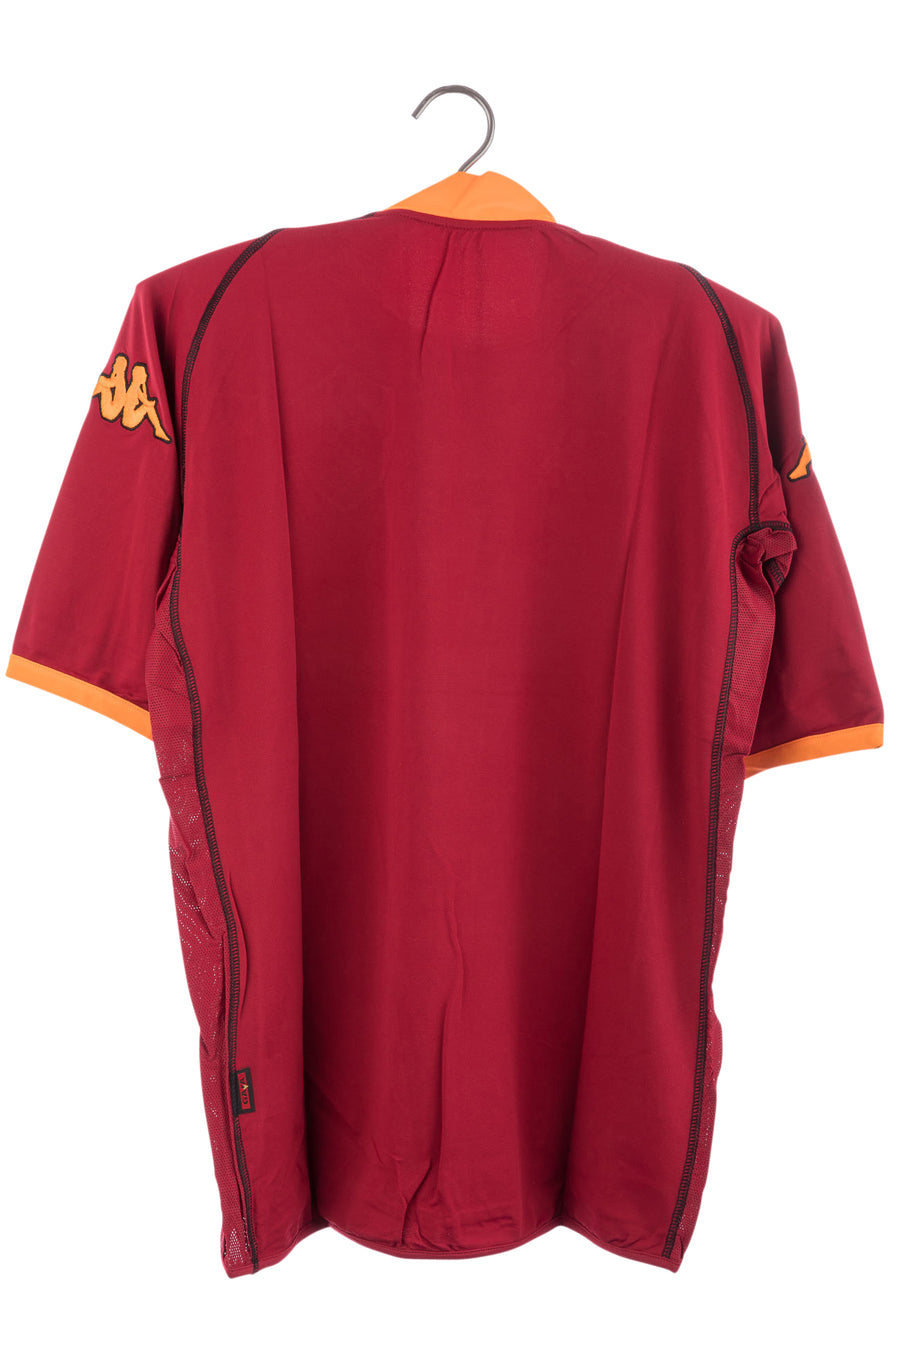 AS Roma 2002 - 2003 Home Football Shirt